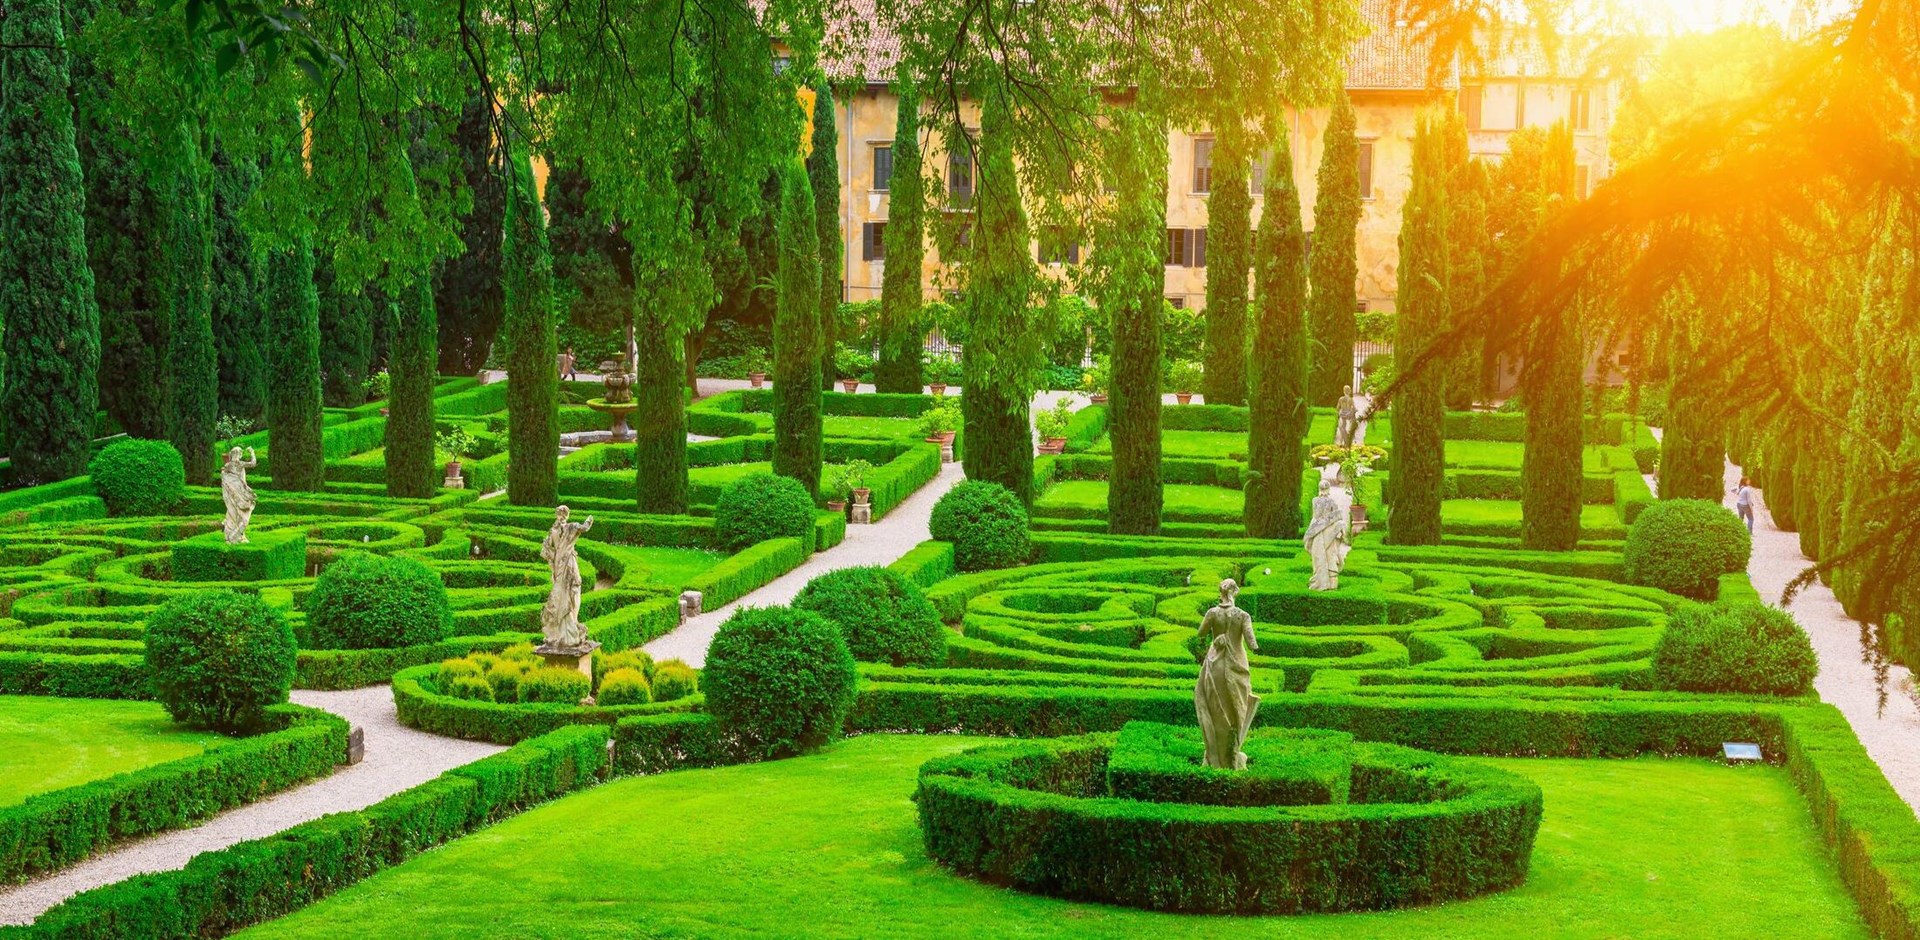 Giusti garden in Verona, Italy. Architecture and landmark of Verona. Postcard of Verona